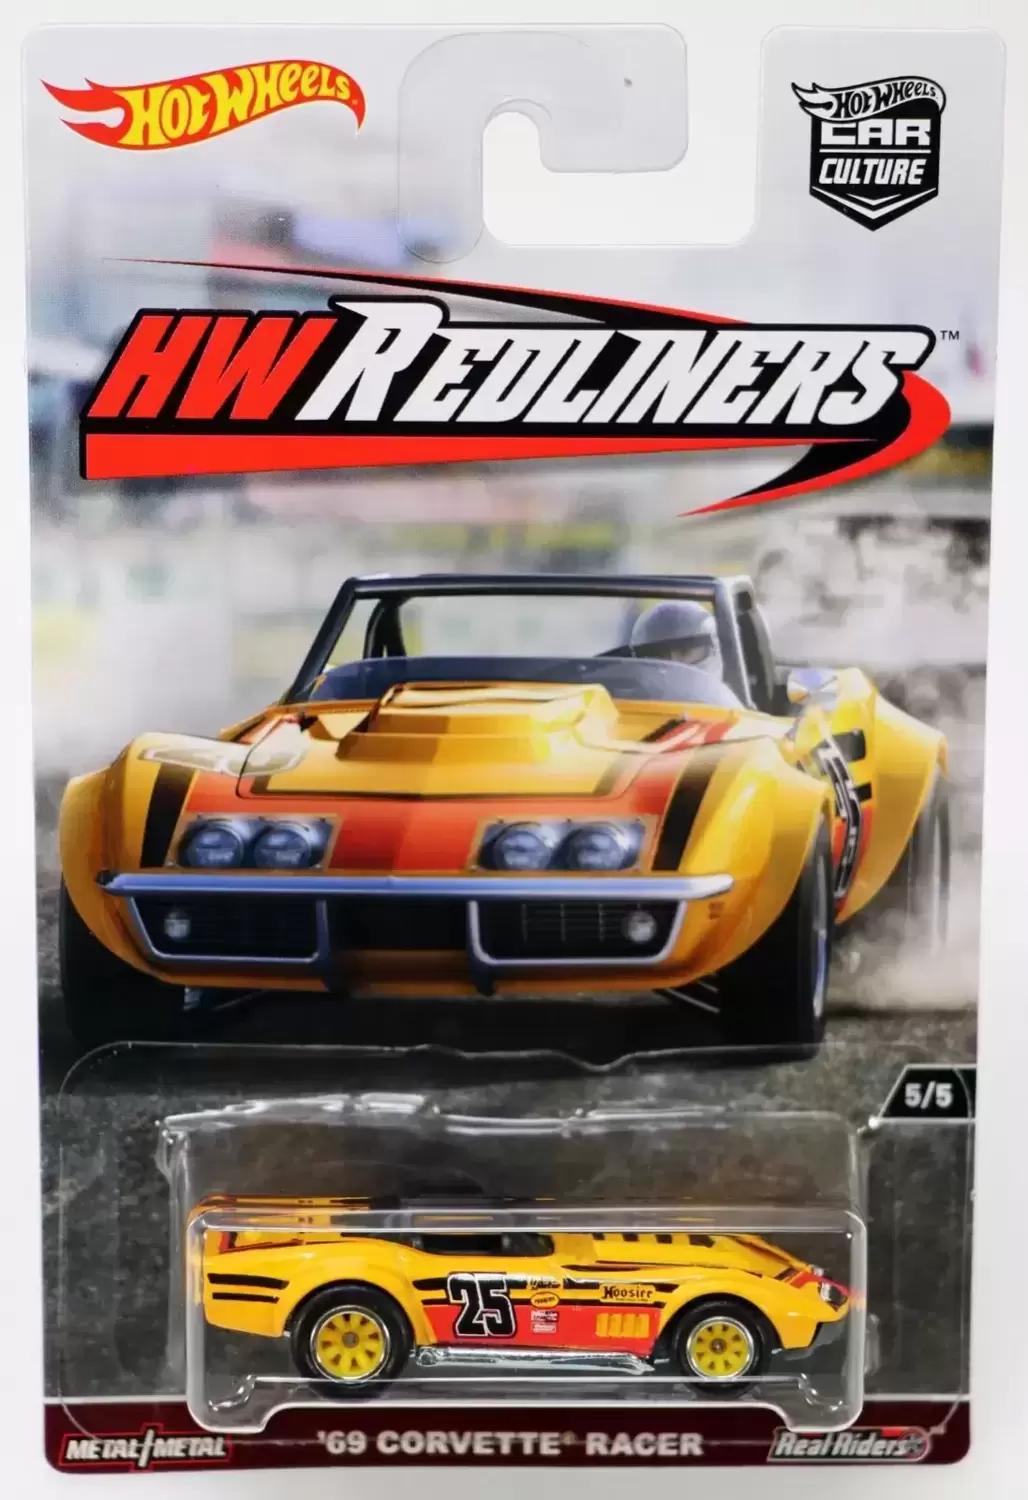 Hot Wheels - Car Culture - HW Redliners - 69 Corvette Racer